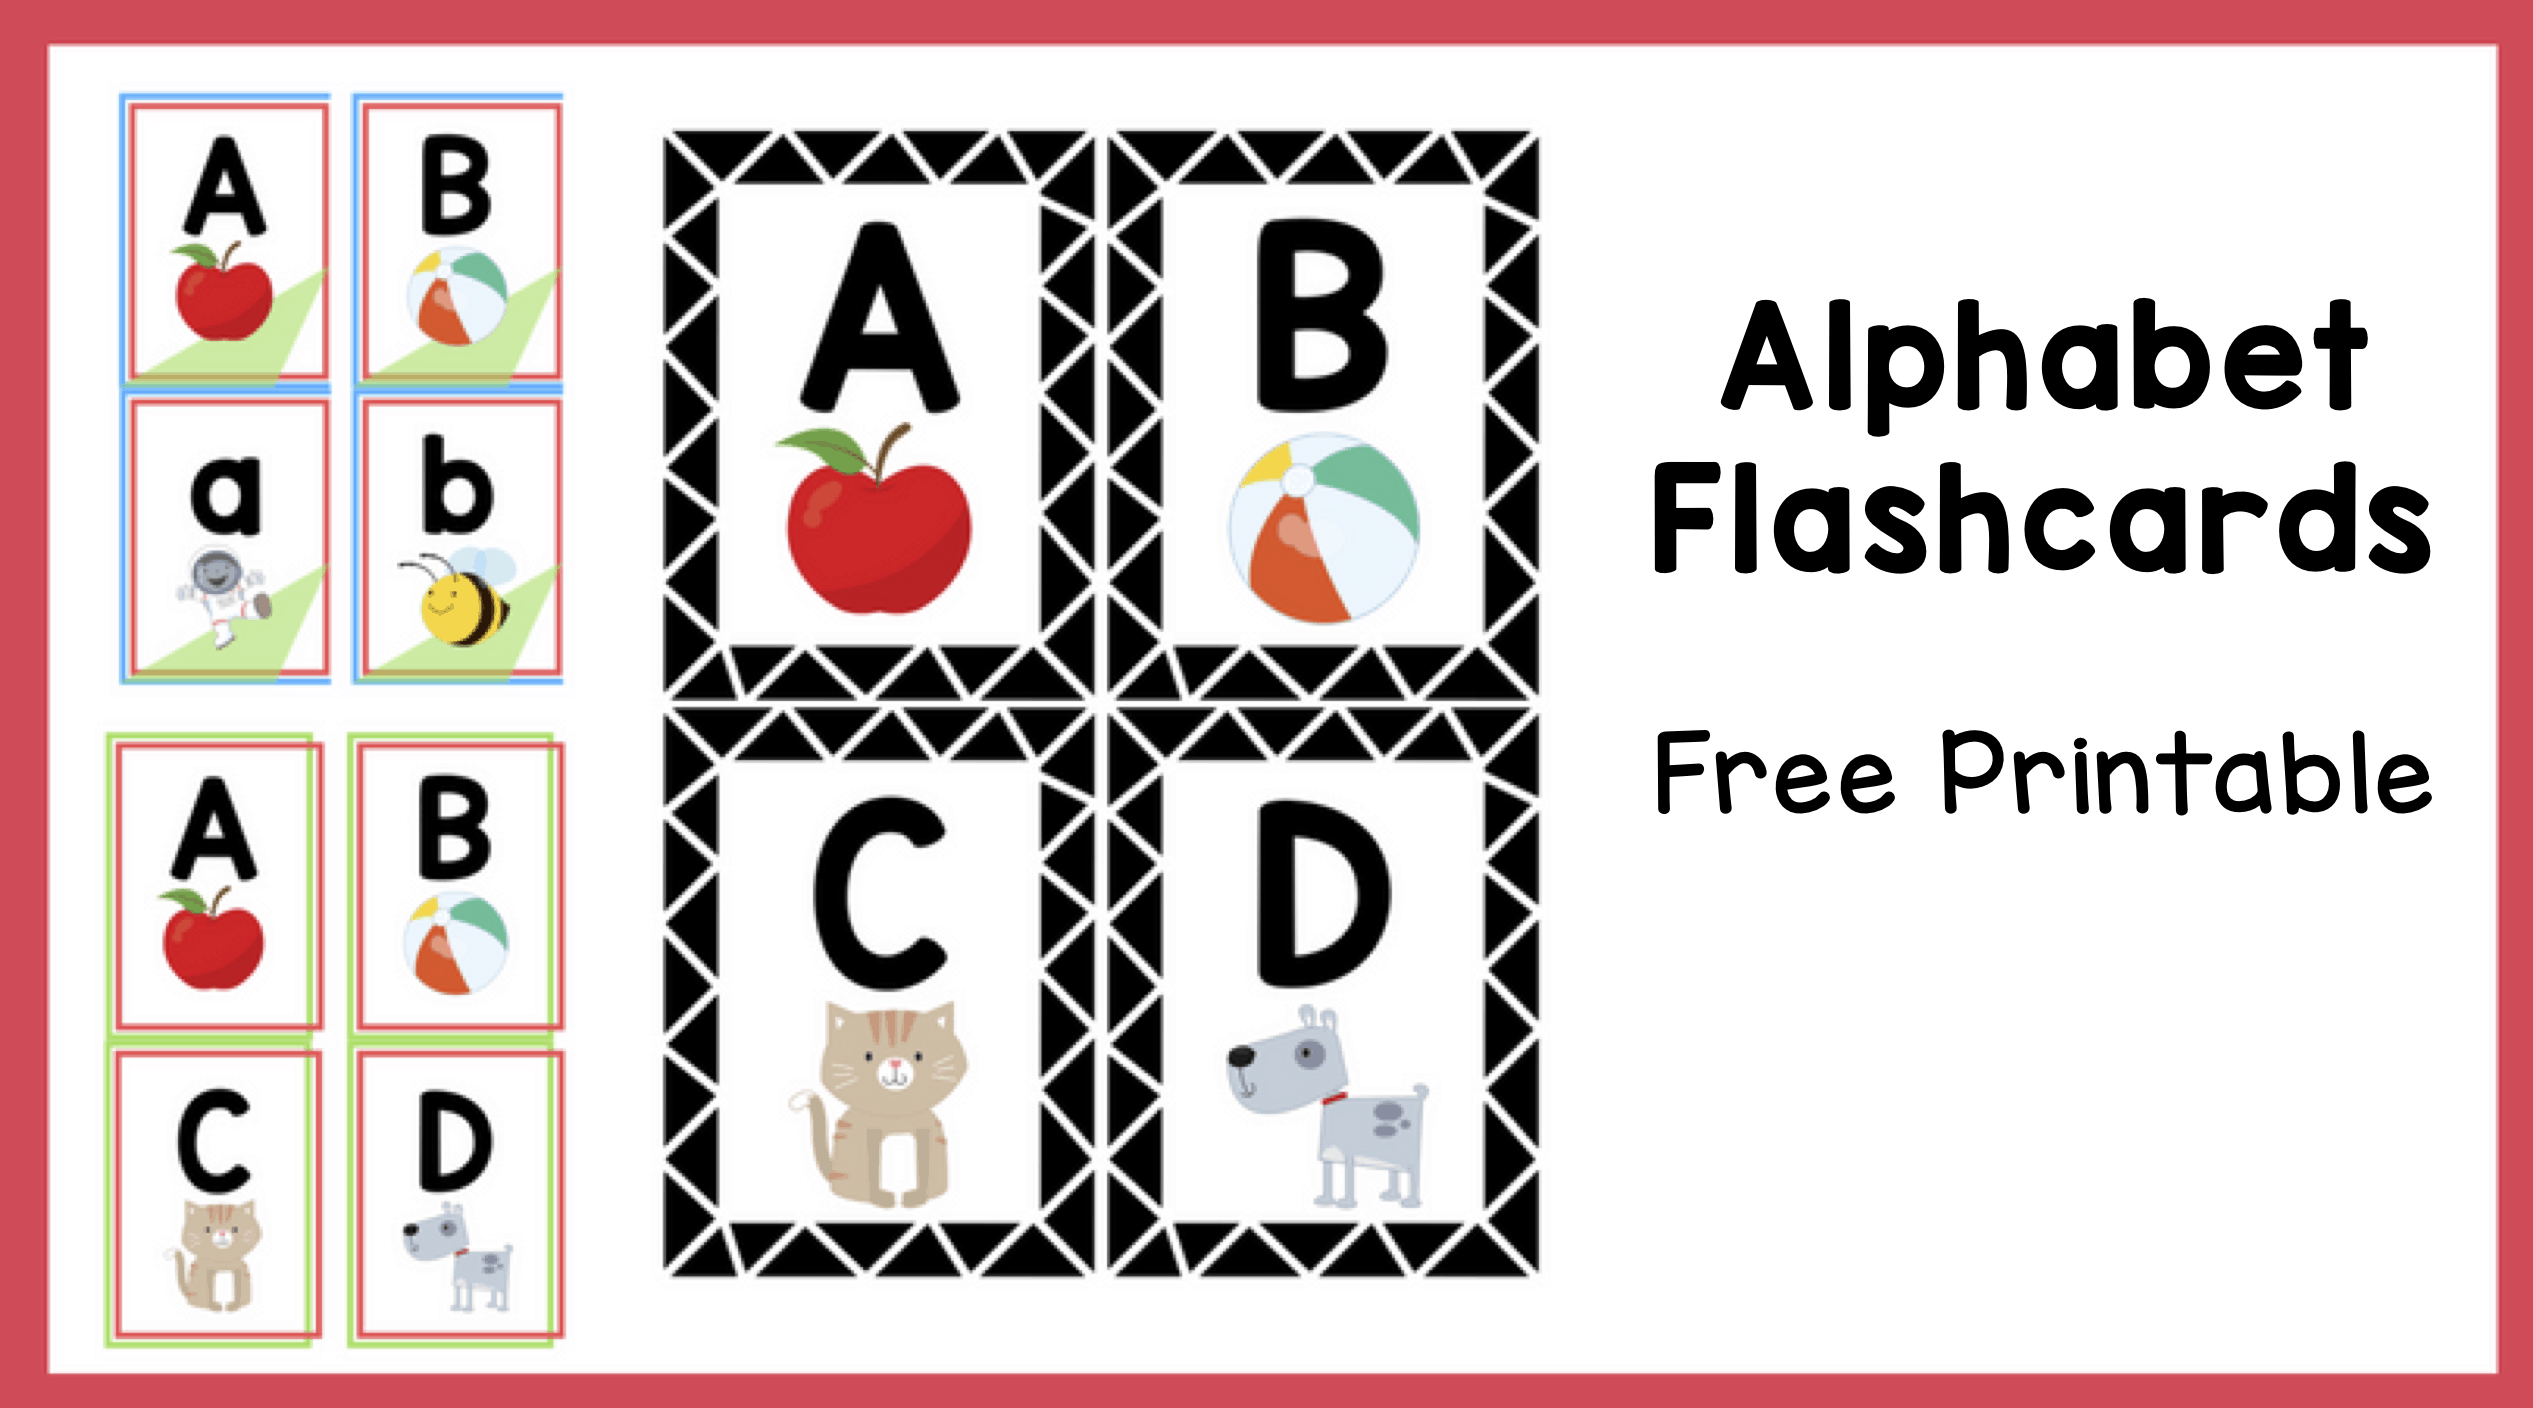 Alphabet Flashcards Free Printable The Teaching Aunt - Free Printable Abc Flashcards With Pictures